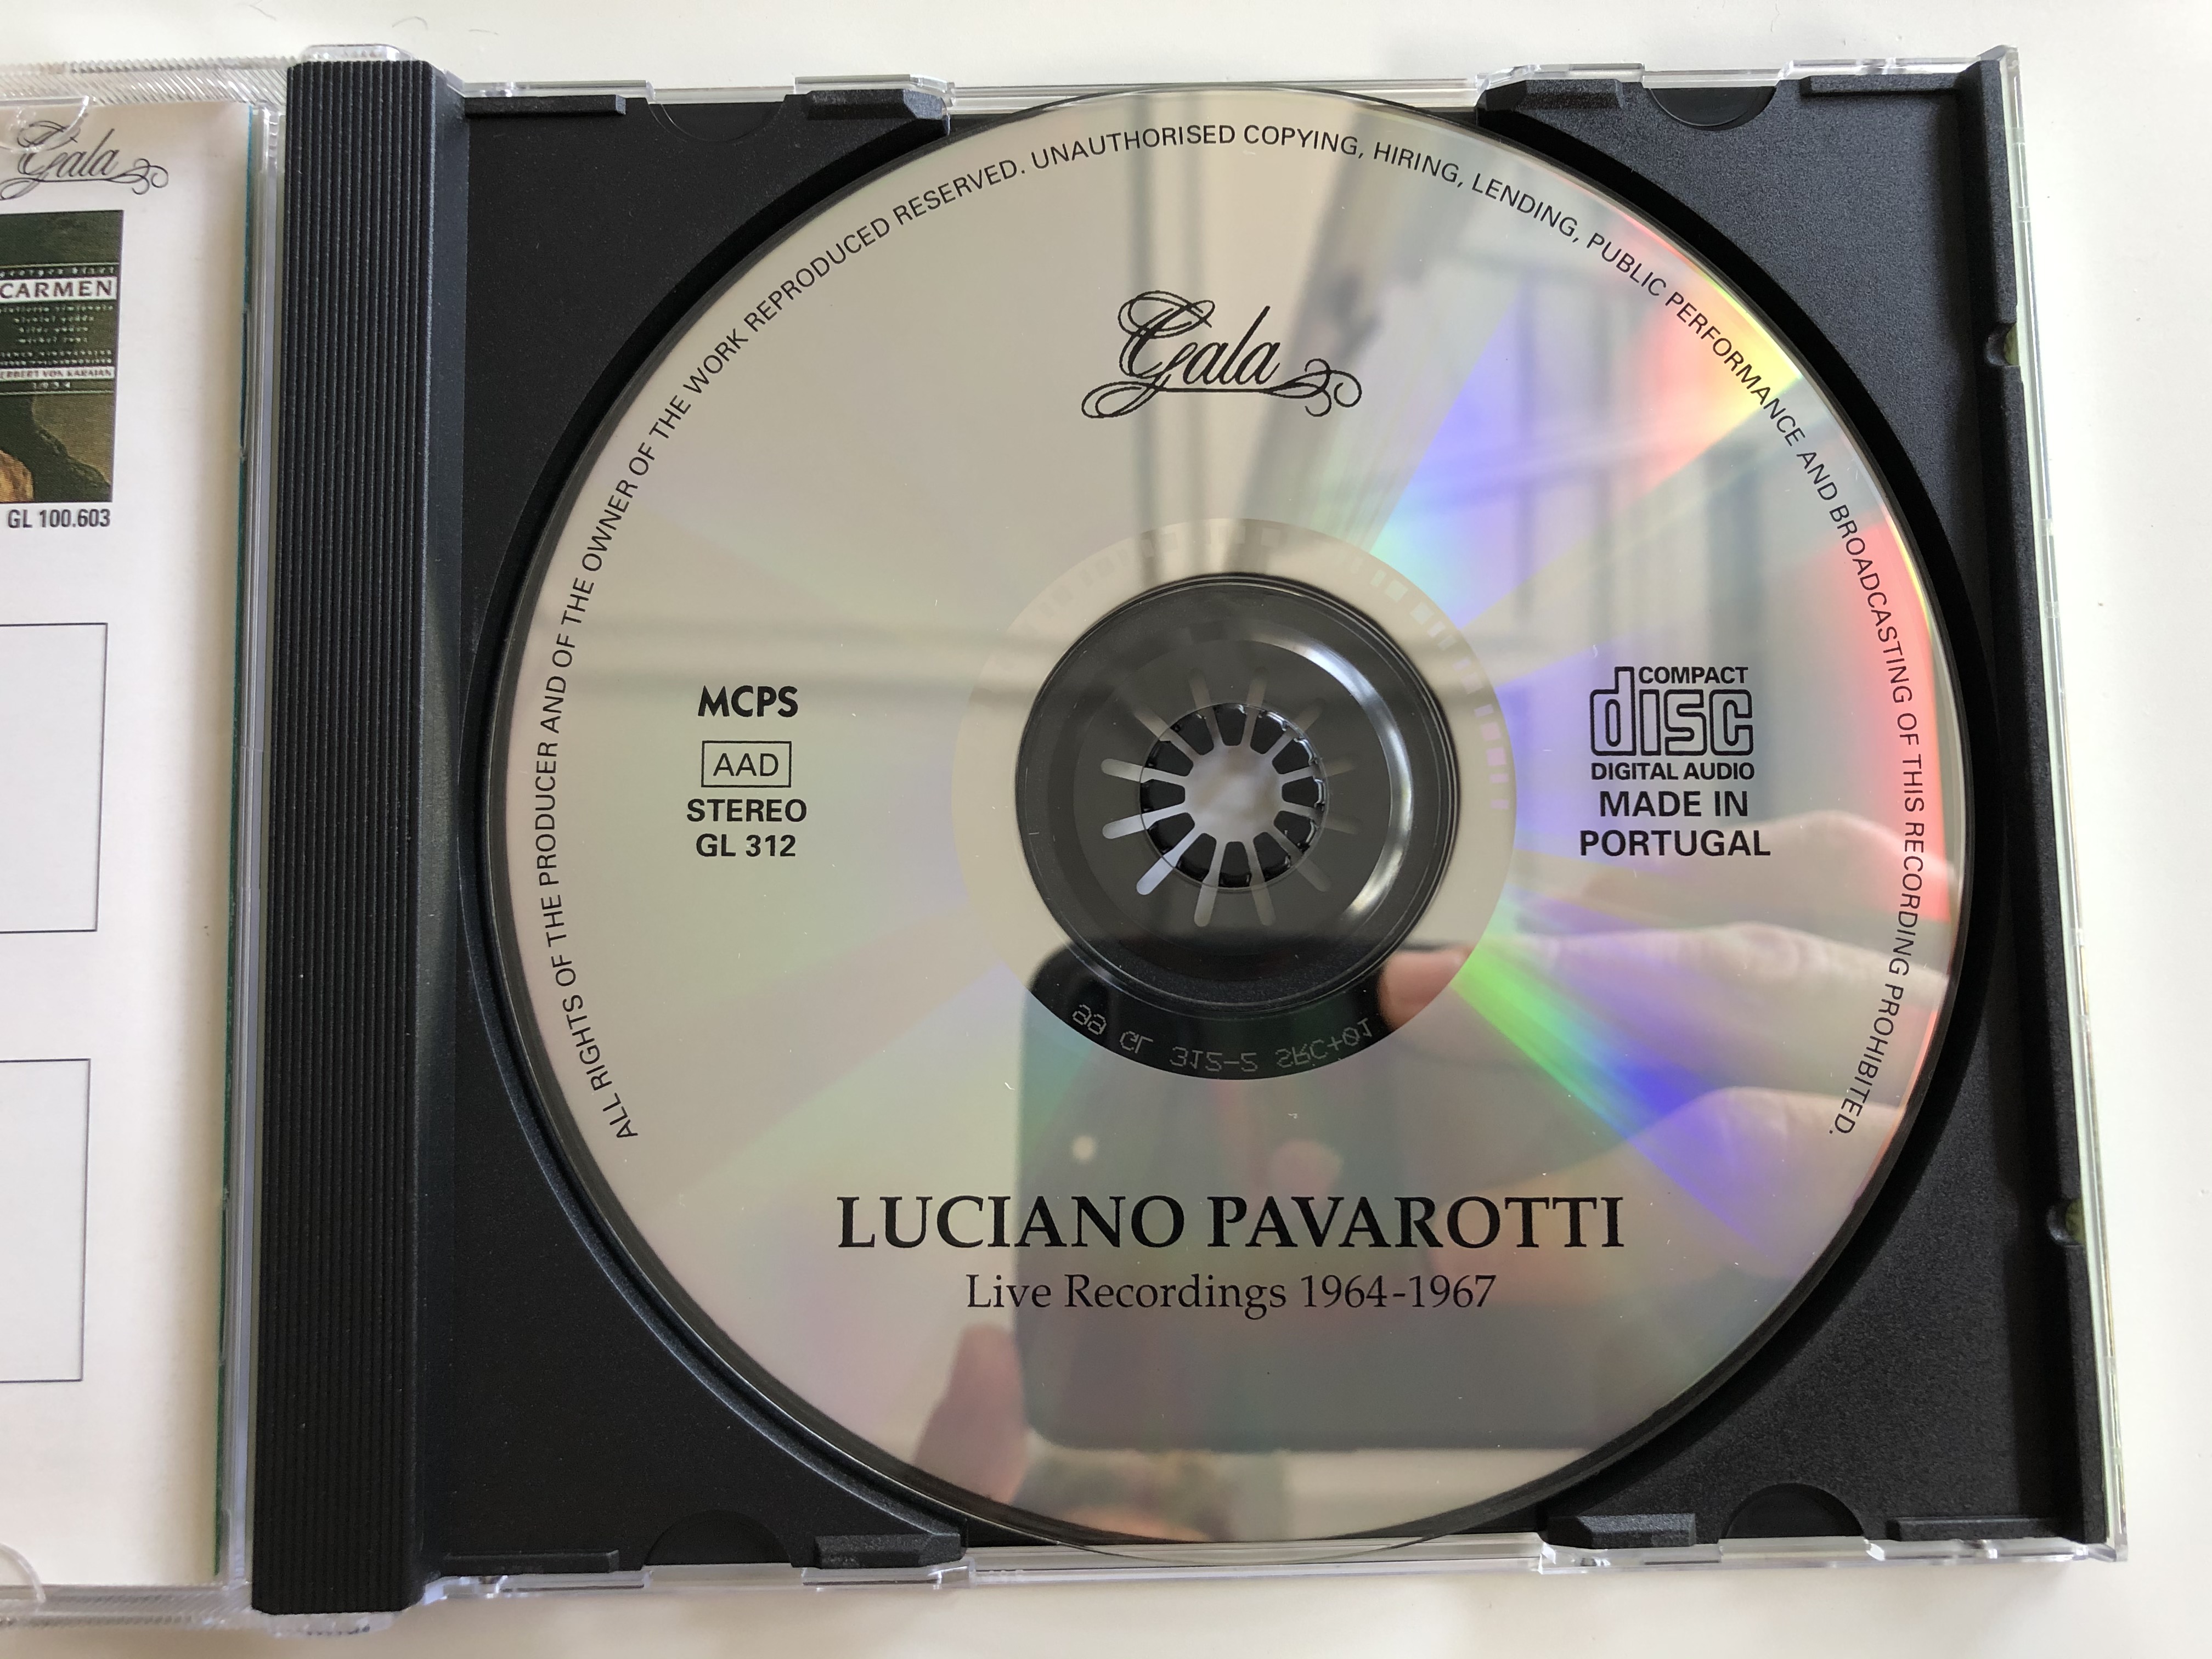 luciano-pavarotti-live-recordings-1964-1967-70-minutes-gala-audio-cd-1991-stereo-gl-312-4-.jpg